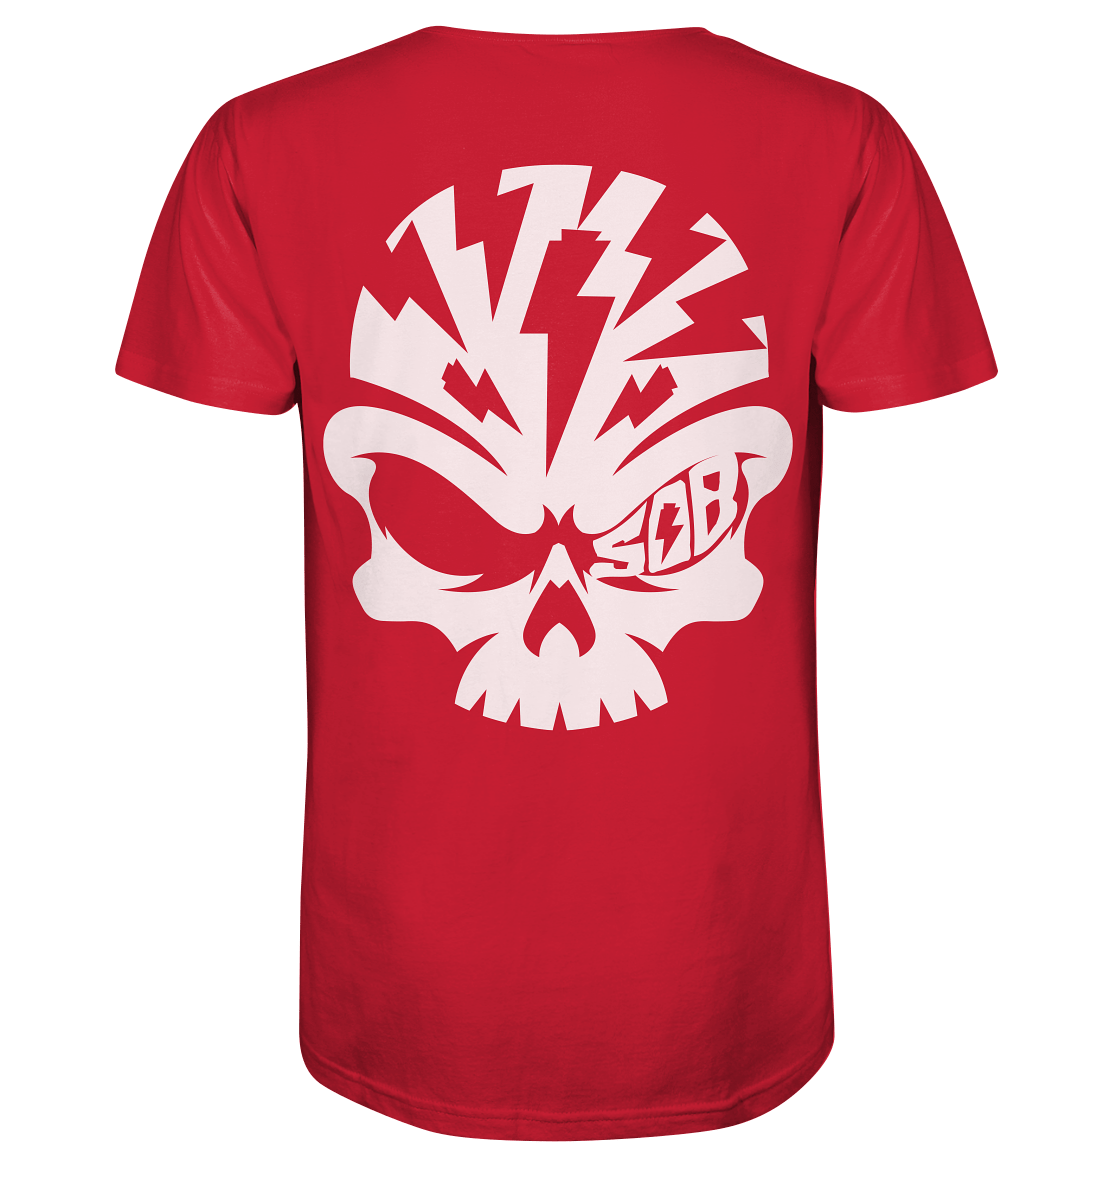 Sons of Battery® - E-MTB Brand & Community Unisex-Shirts Red / XS SoB Skull White - Organic Shirt E-Bike-Community